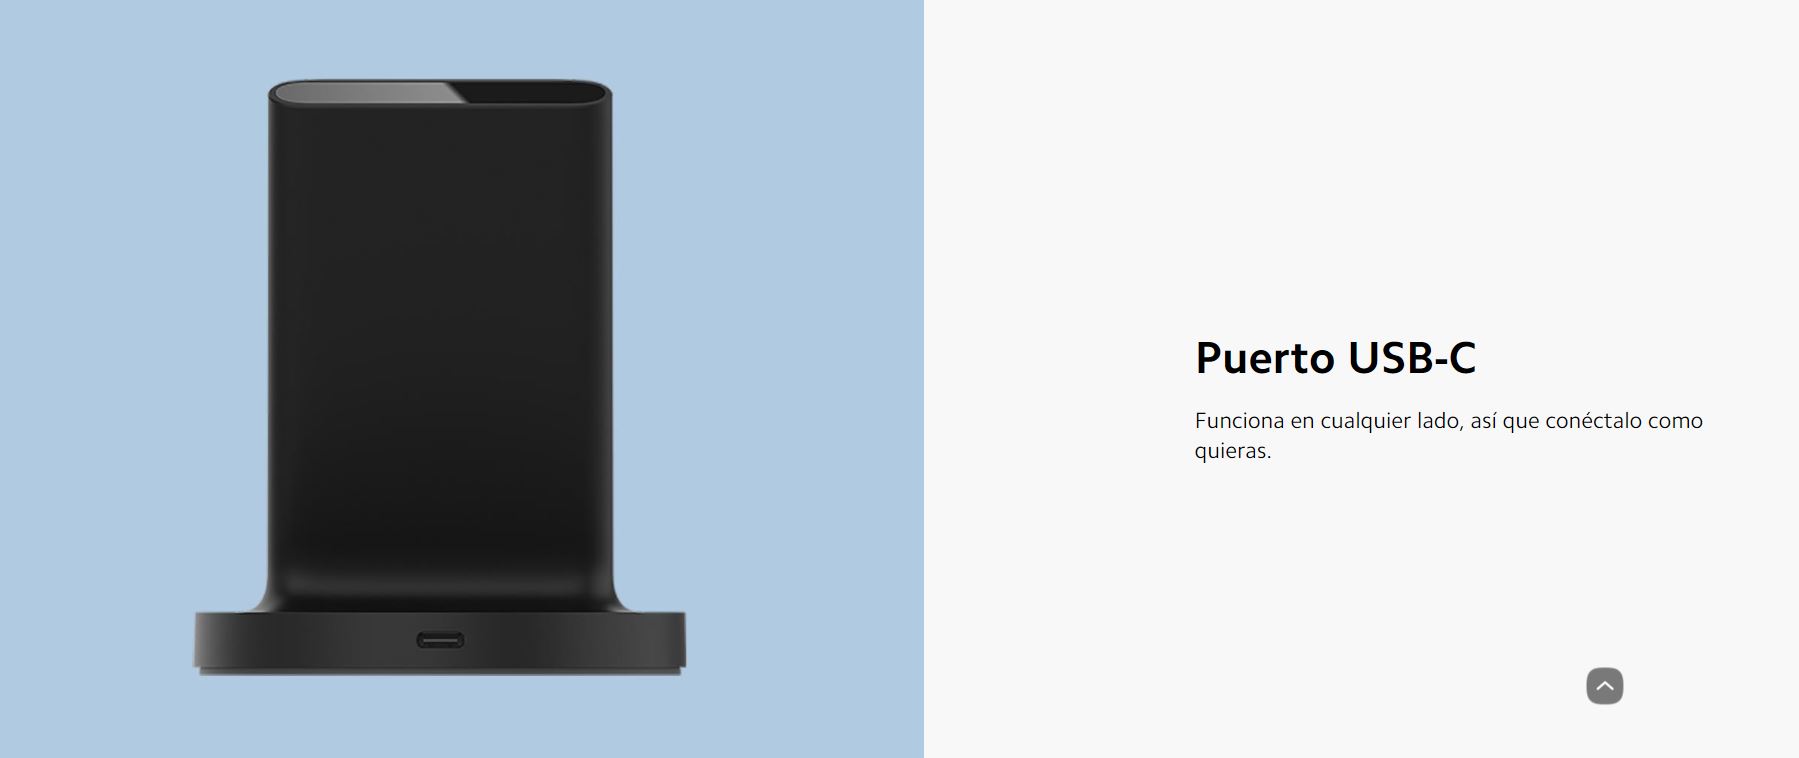 Xiaomi Mi Wireless Charging Stand 20W – Cargador Inalámbrico